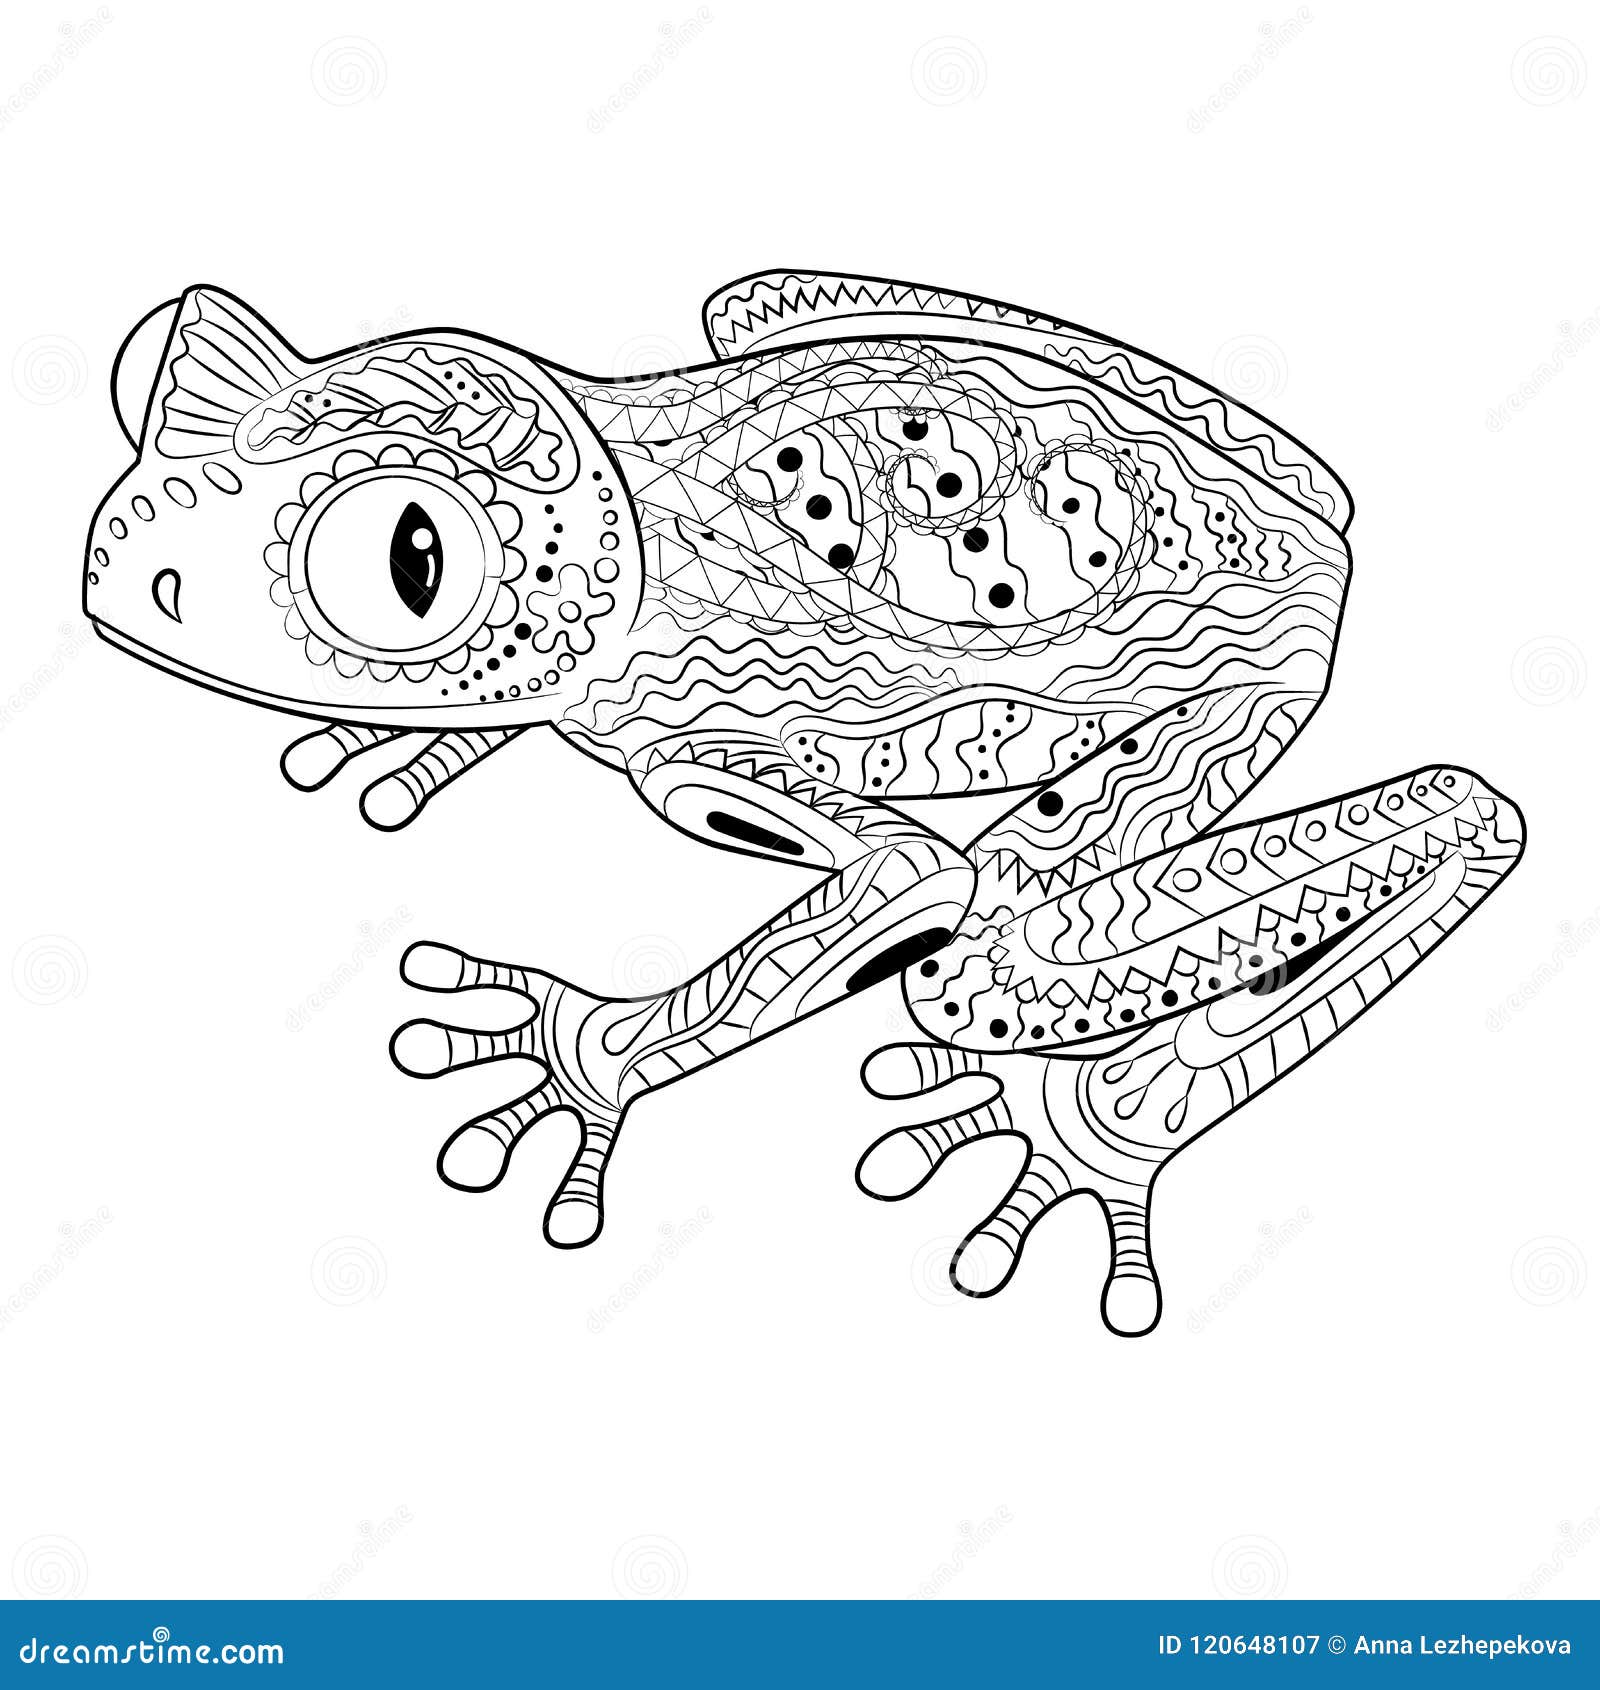 Amphibians coloring stock illustrations â amphibians coloring stock illustrations vectors clipart